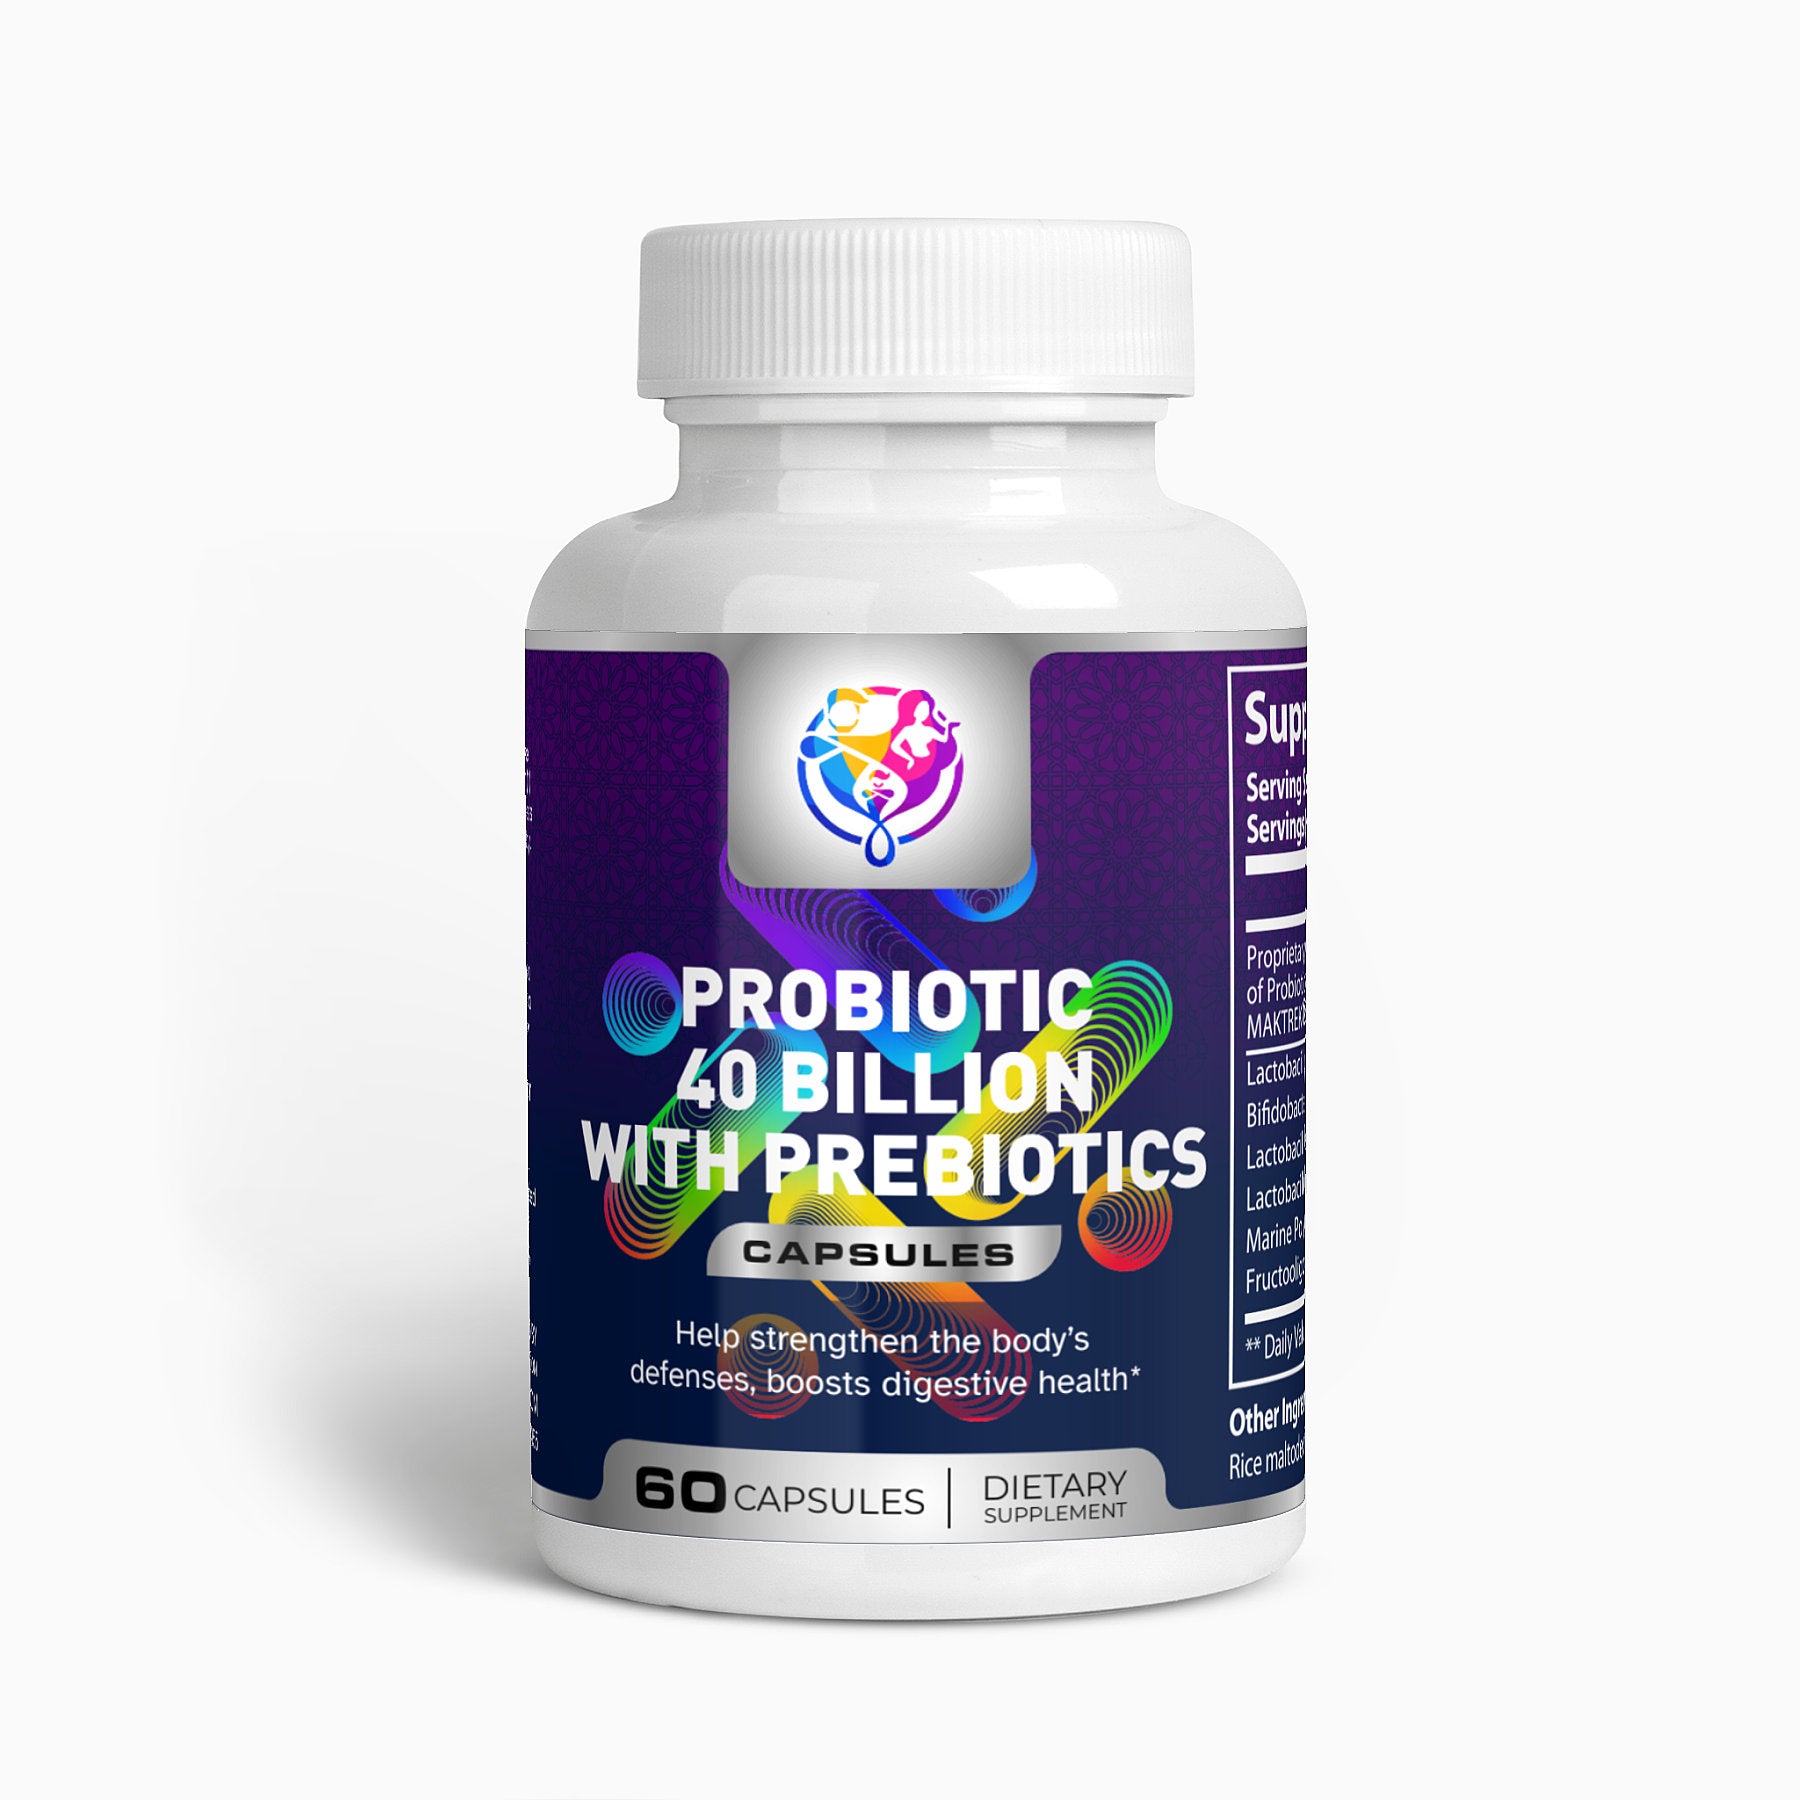 OBEASY™ Probiotic 40 Billion with Prebiotics